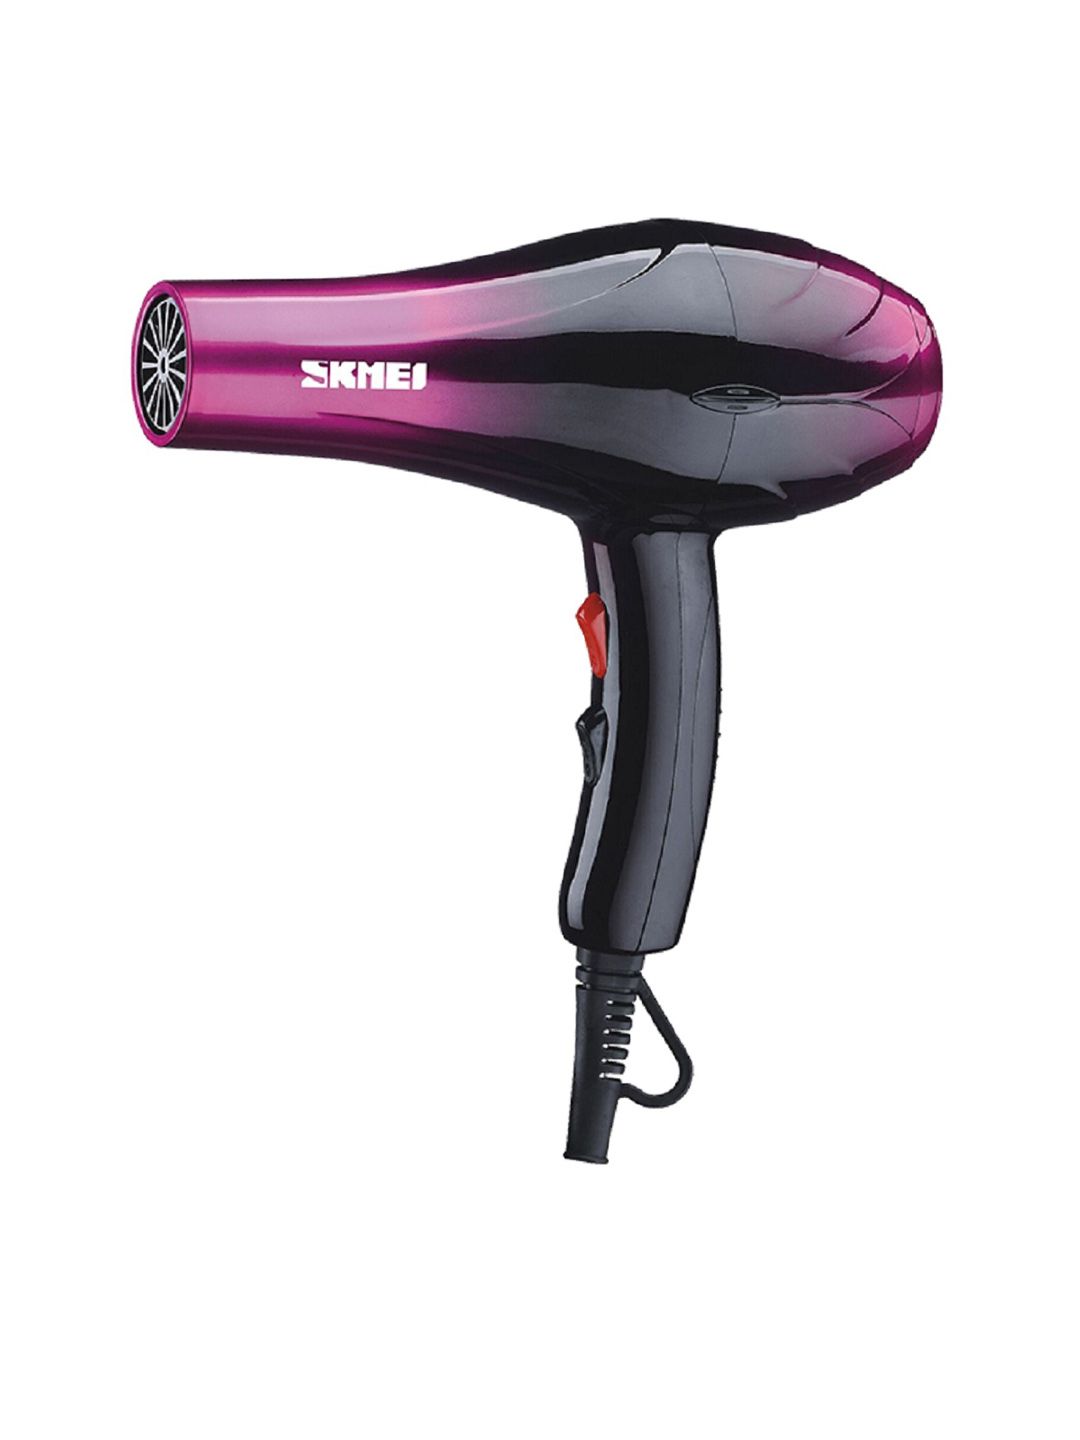 Skmei Unisex Black 2002 1800w Electric Hair Dryer Price in India